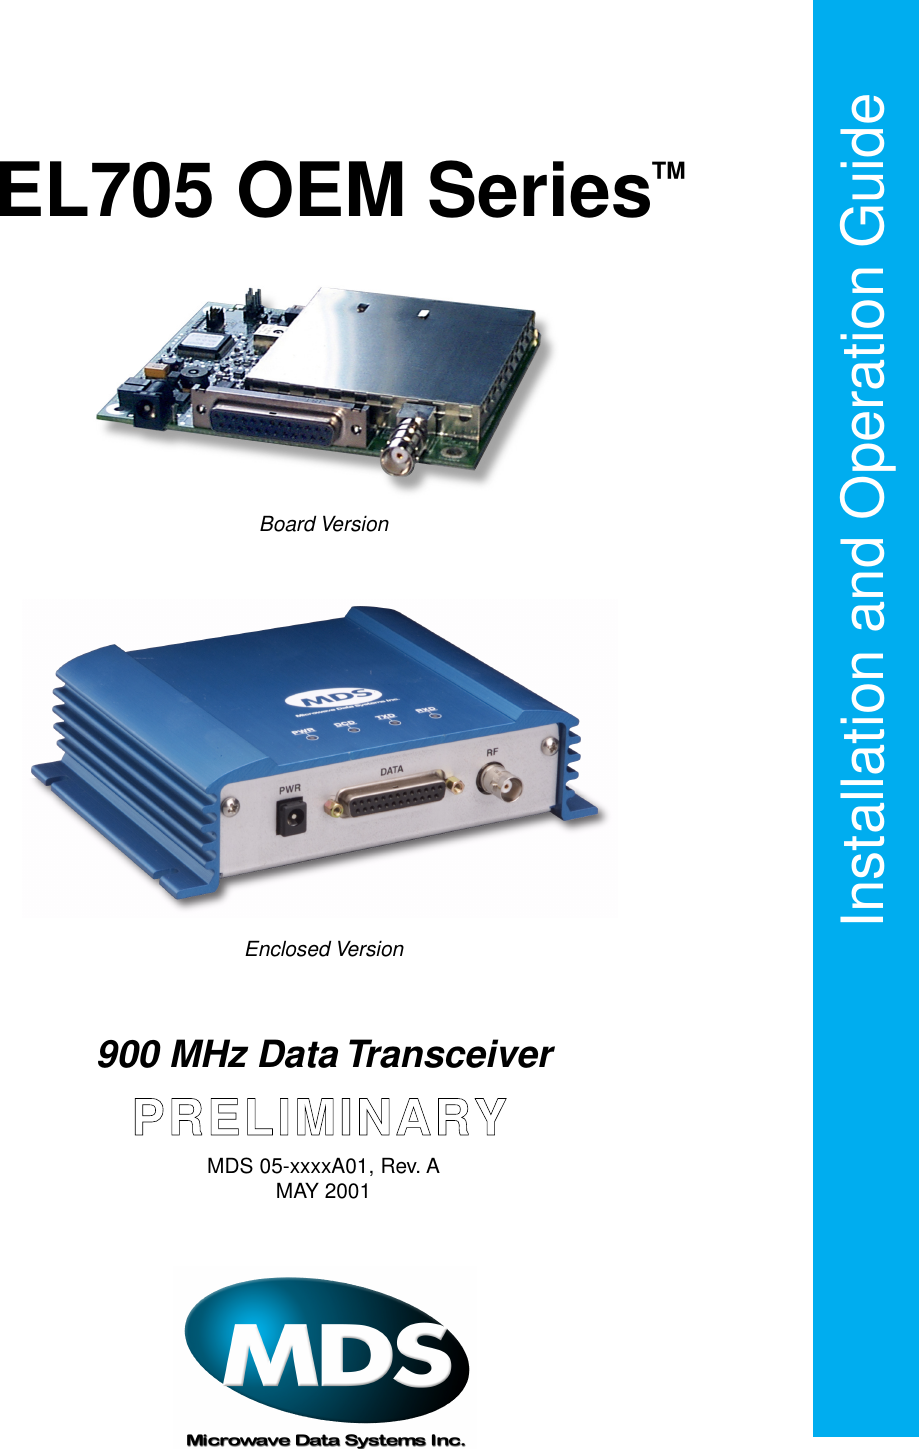  Installation and Operation Guide EL705 OEM Series Board VersionEnclosed Version 900 MHz Data Transceiver MDS 05-xxxxA01, Rev. AMAY 2001 ™ PRELIMINARY